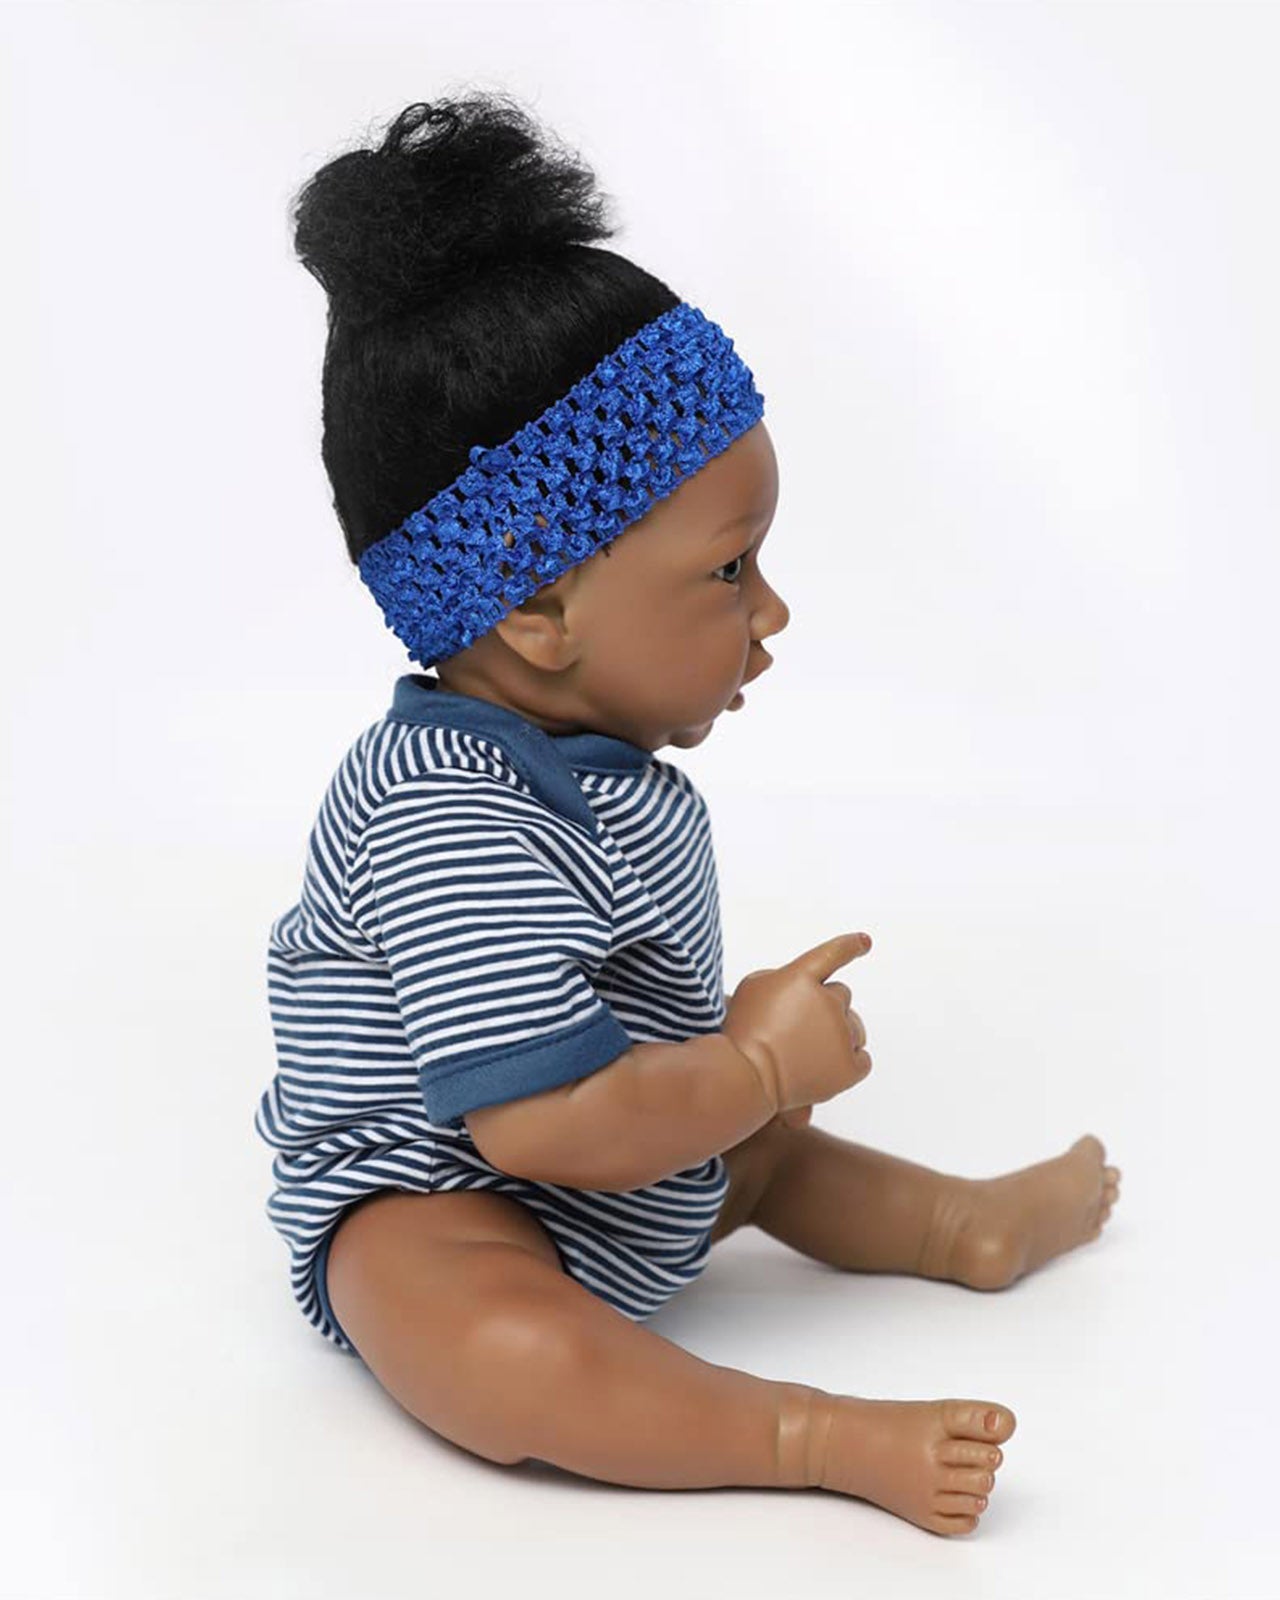 Blanche - 20" Reborn Baby Dolls Black African American Newborn Girl with Lifelike Soft Body Silicone Limbs